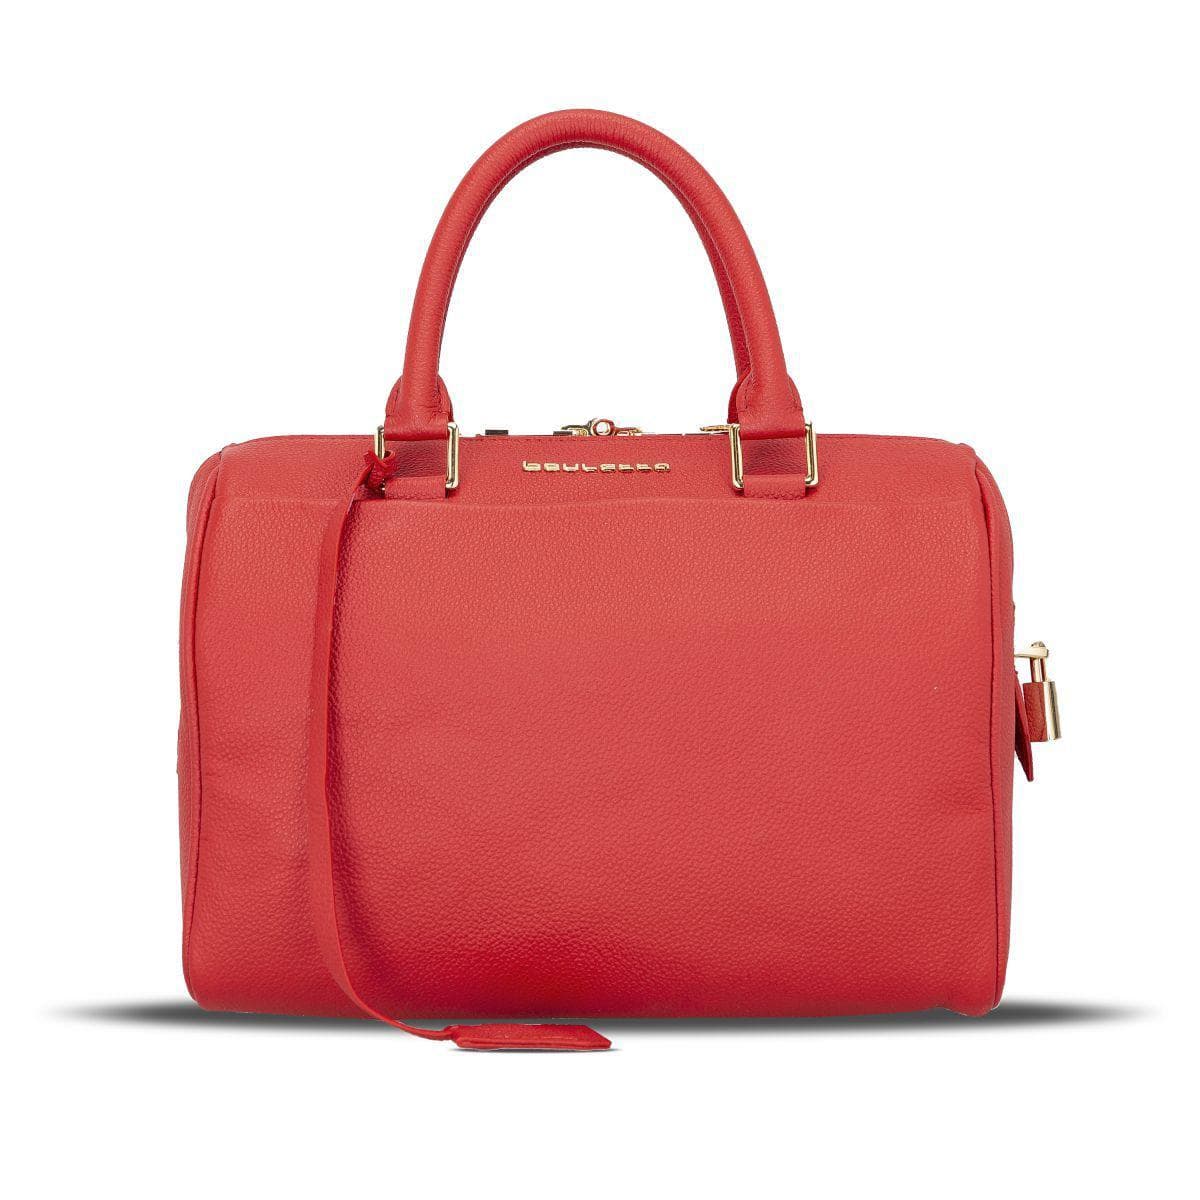 Shine Women's Leather Handbags Red Bouletta Shop